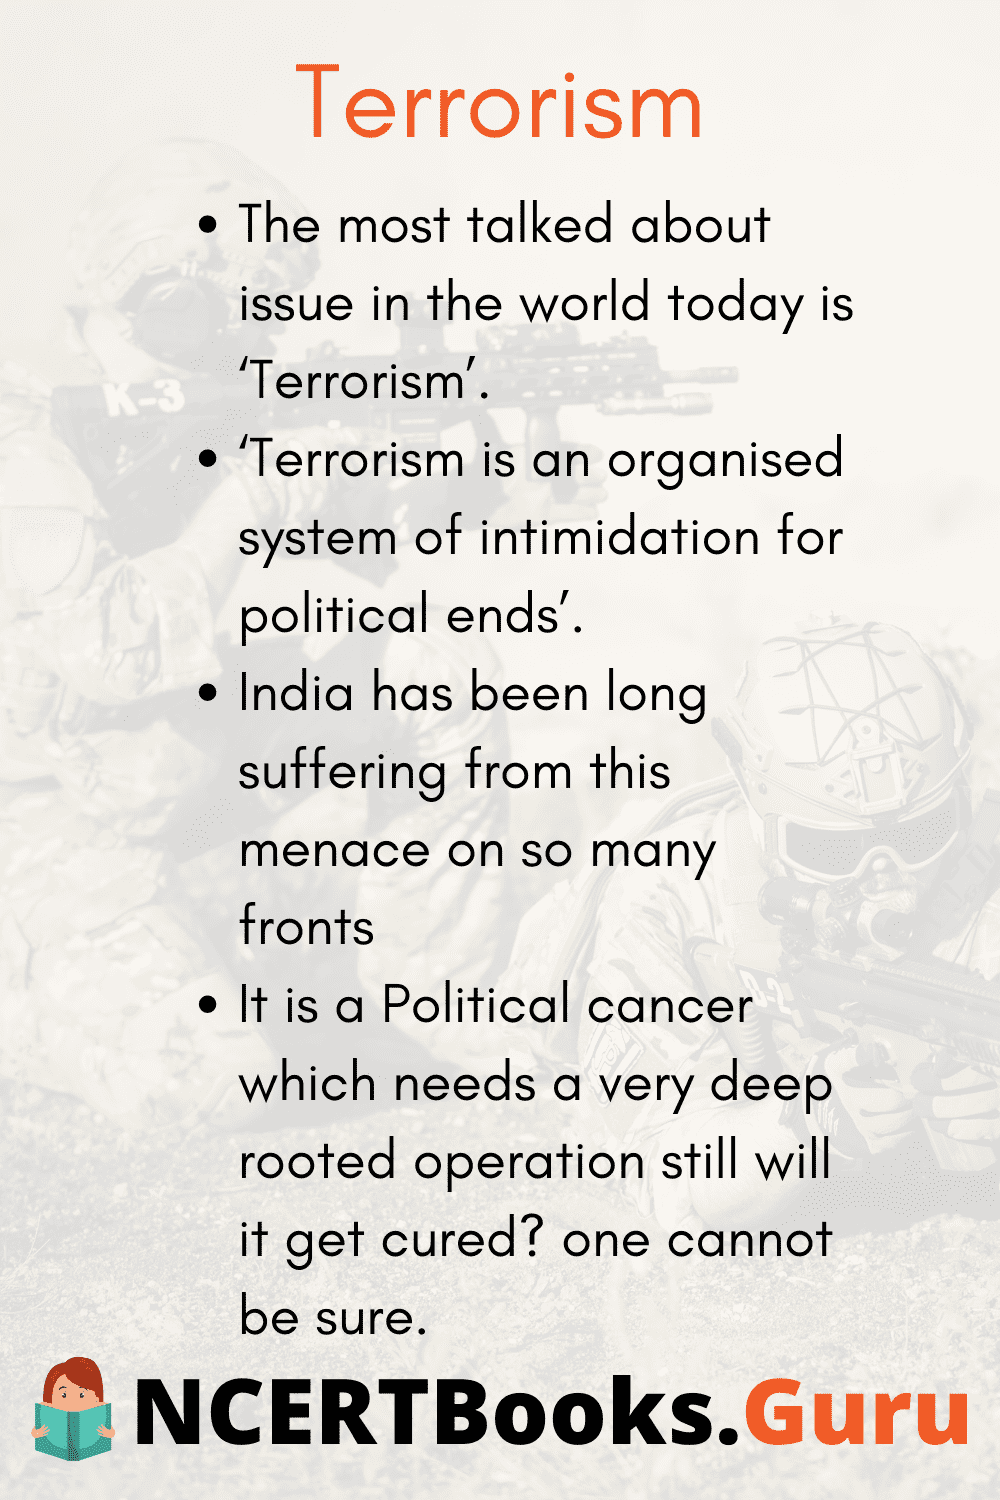 essay on global fight against terrorism